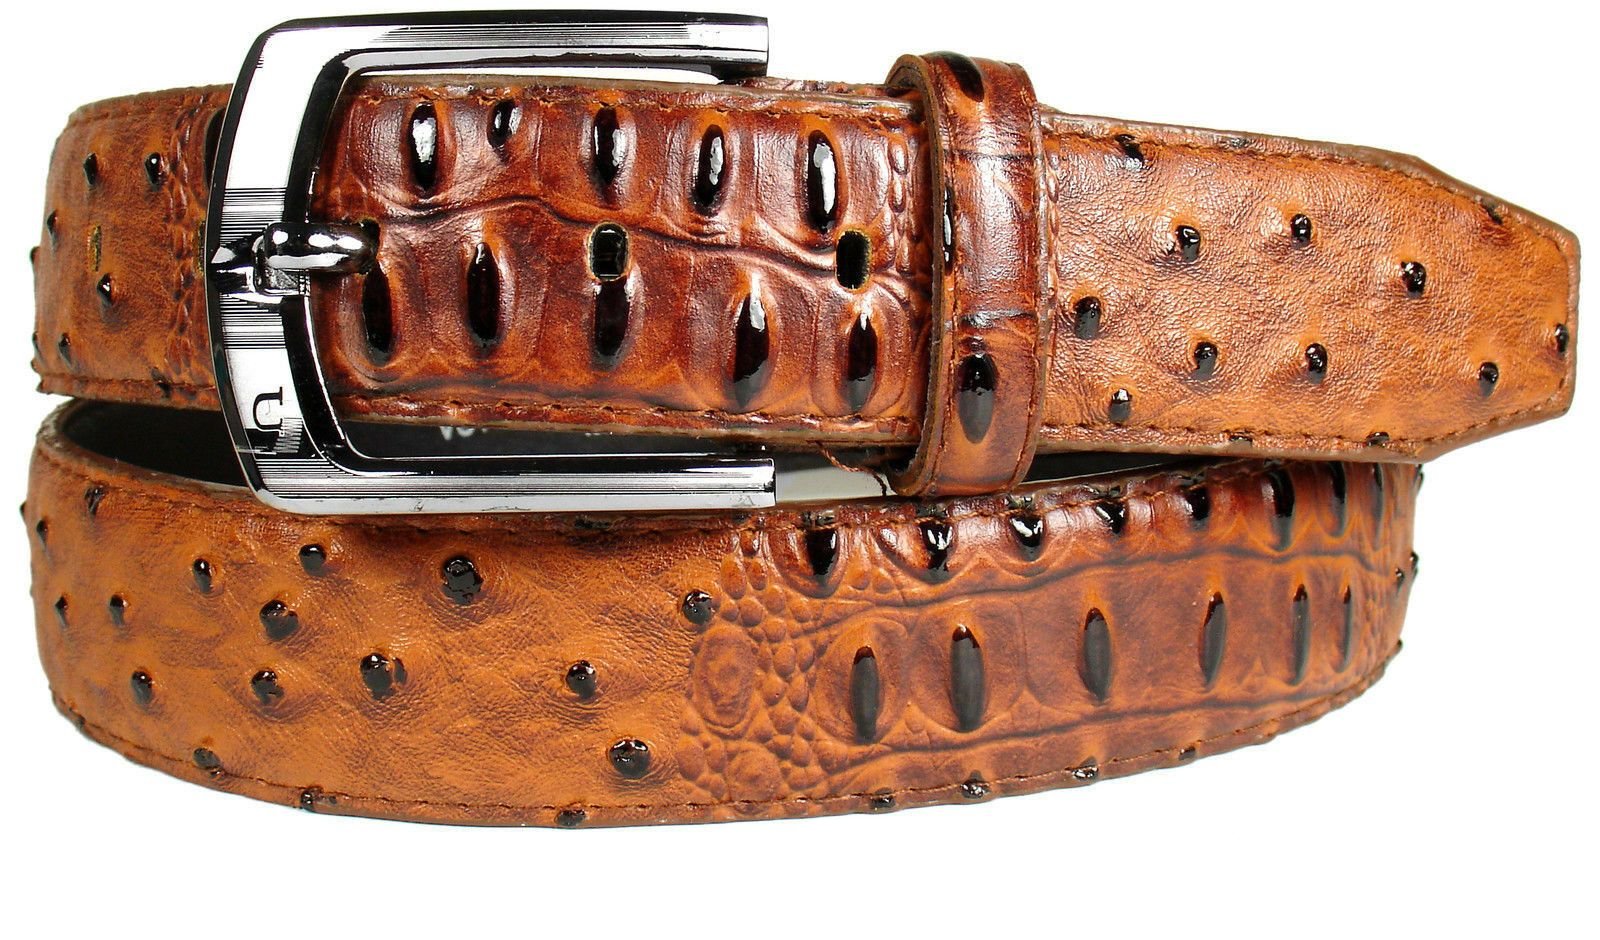 www. - Fashion Belts for women Genuine leather belt woman High  quality Designer Crocodile